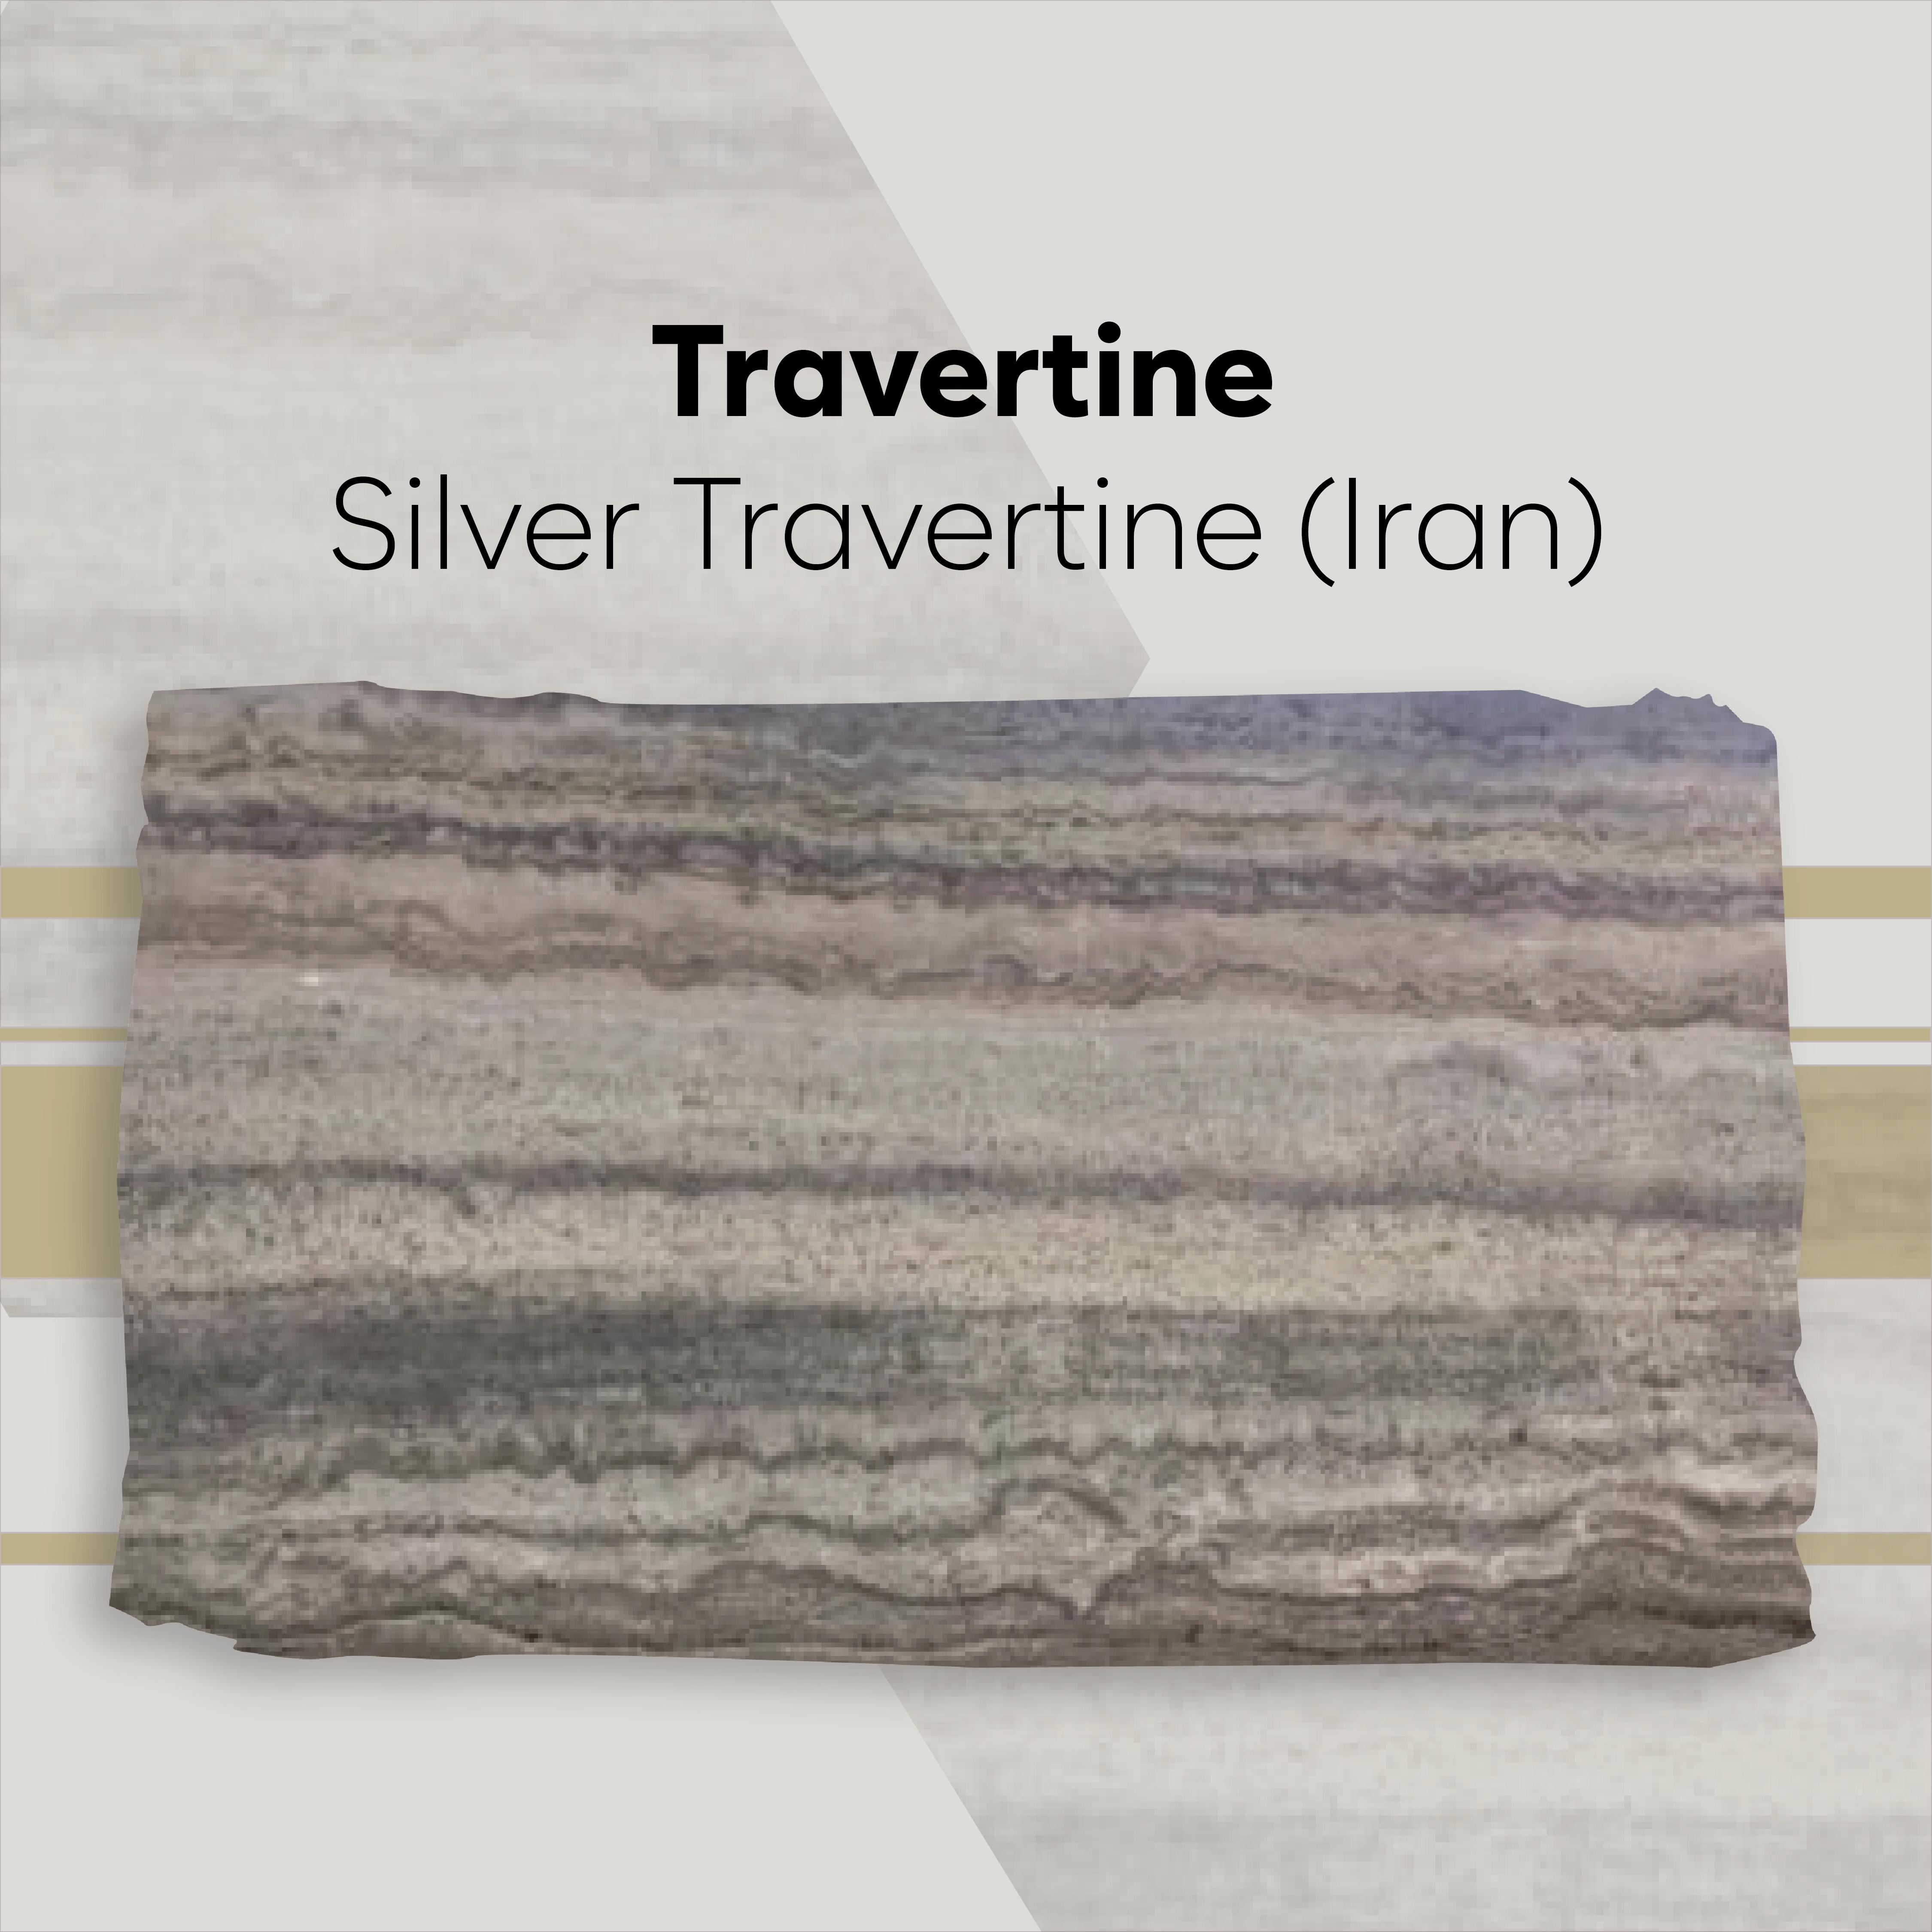 Silver Travertine (Iran)